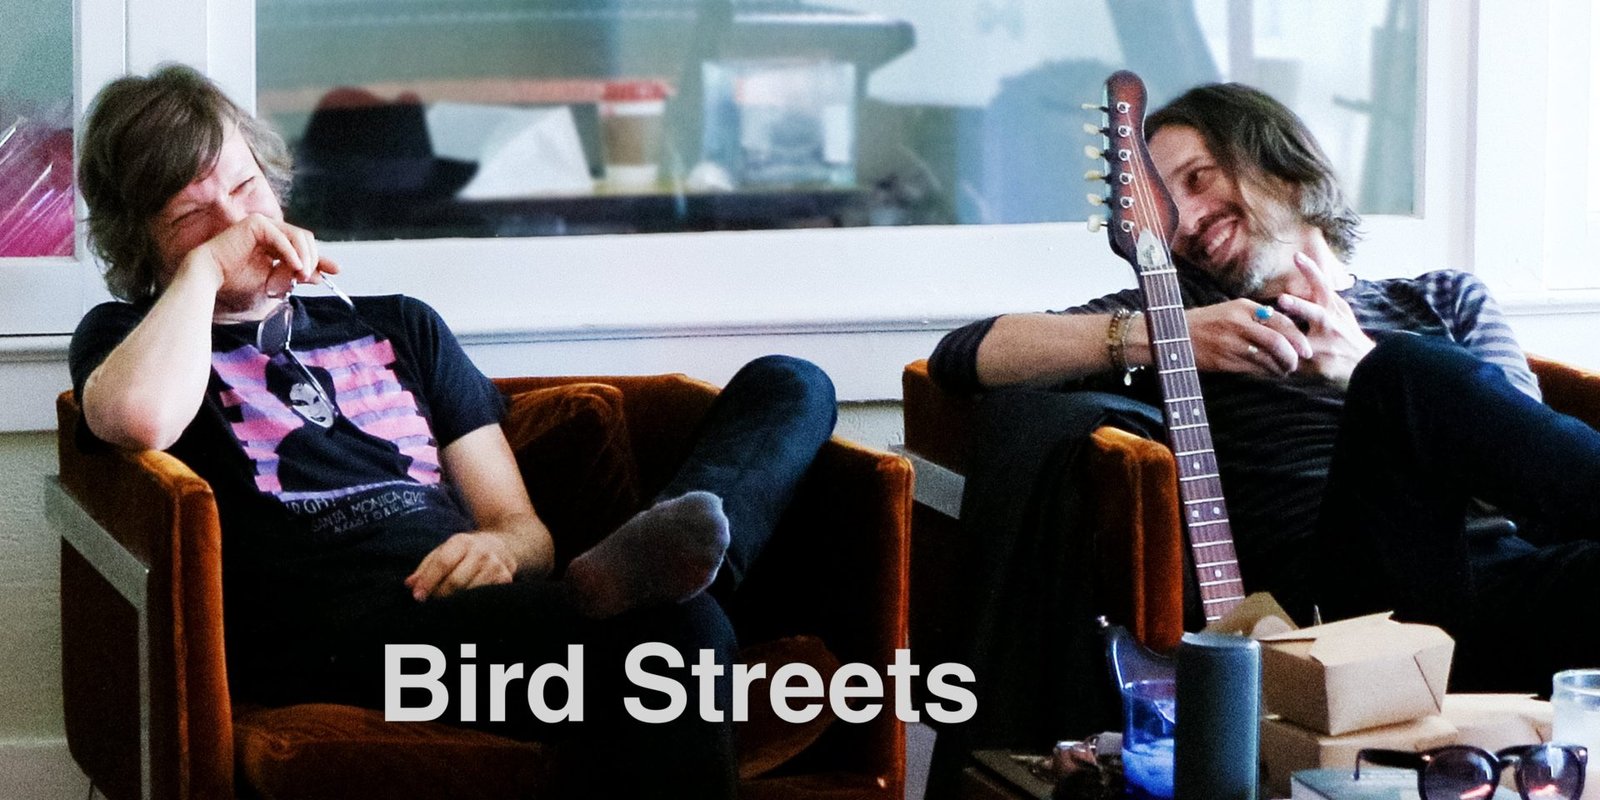 Bird Streets